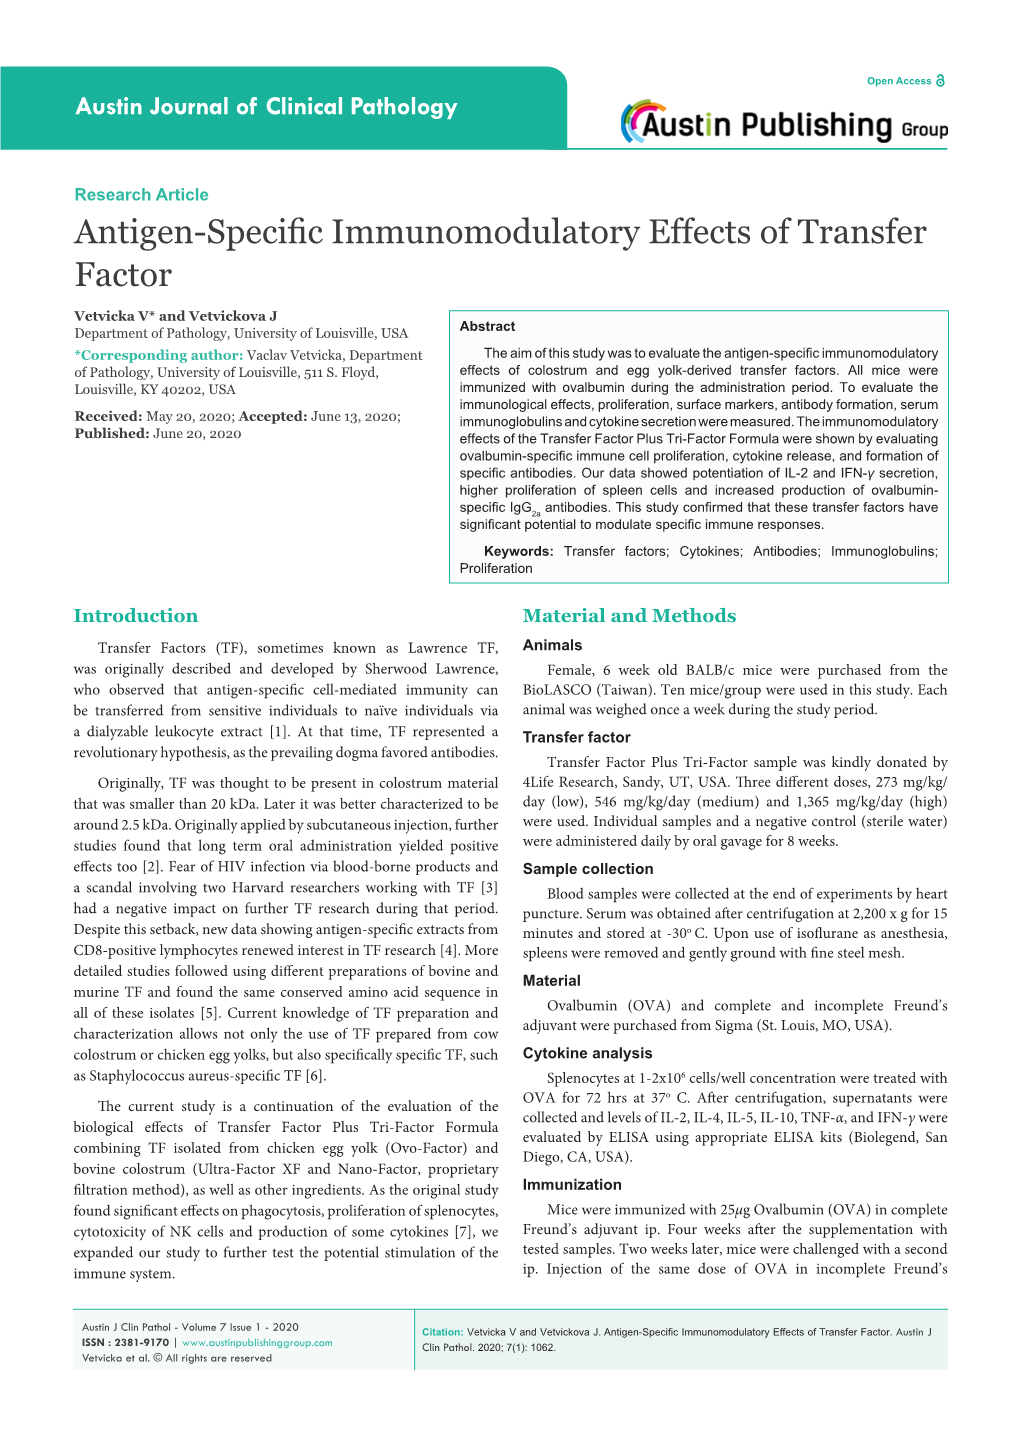 Antigen-Specific Immunomodulatory Effects of Transfer Factor